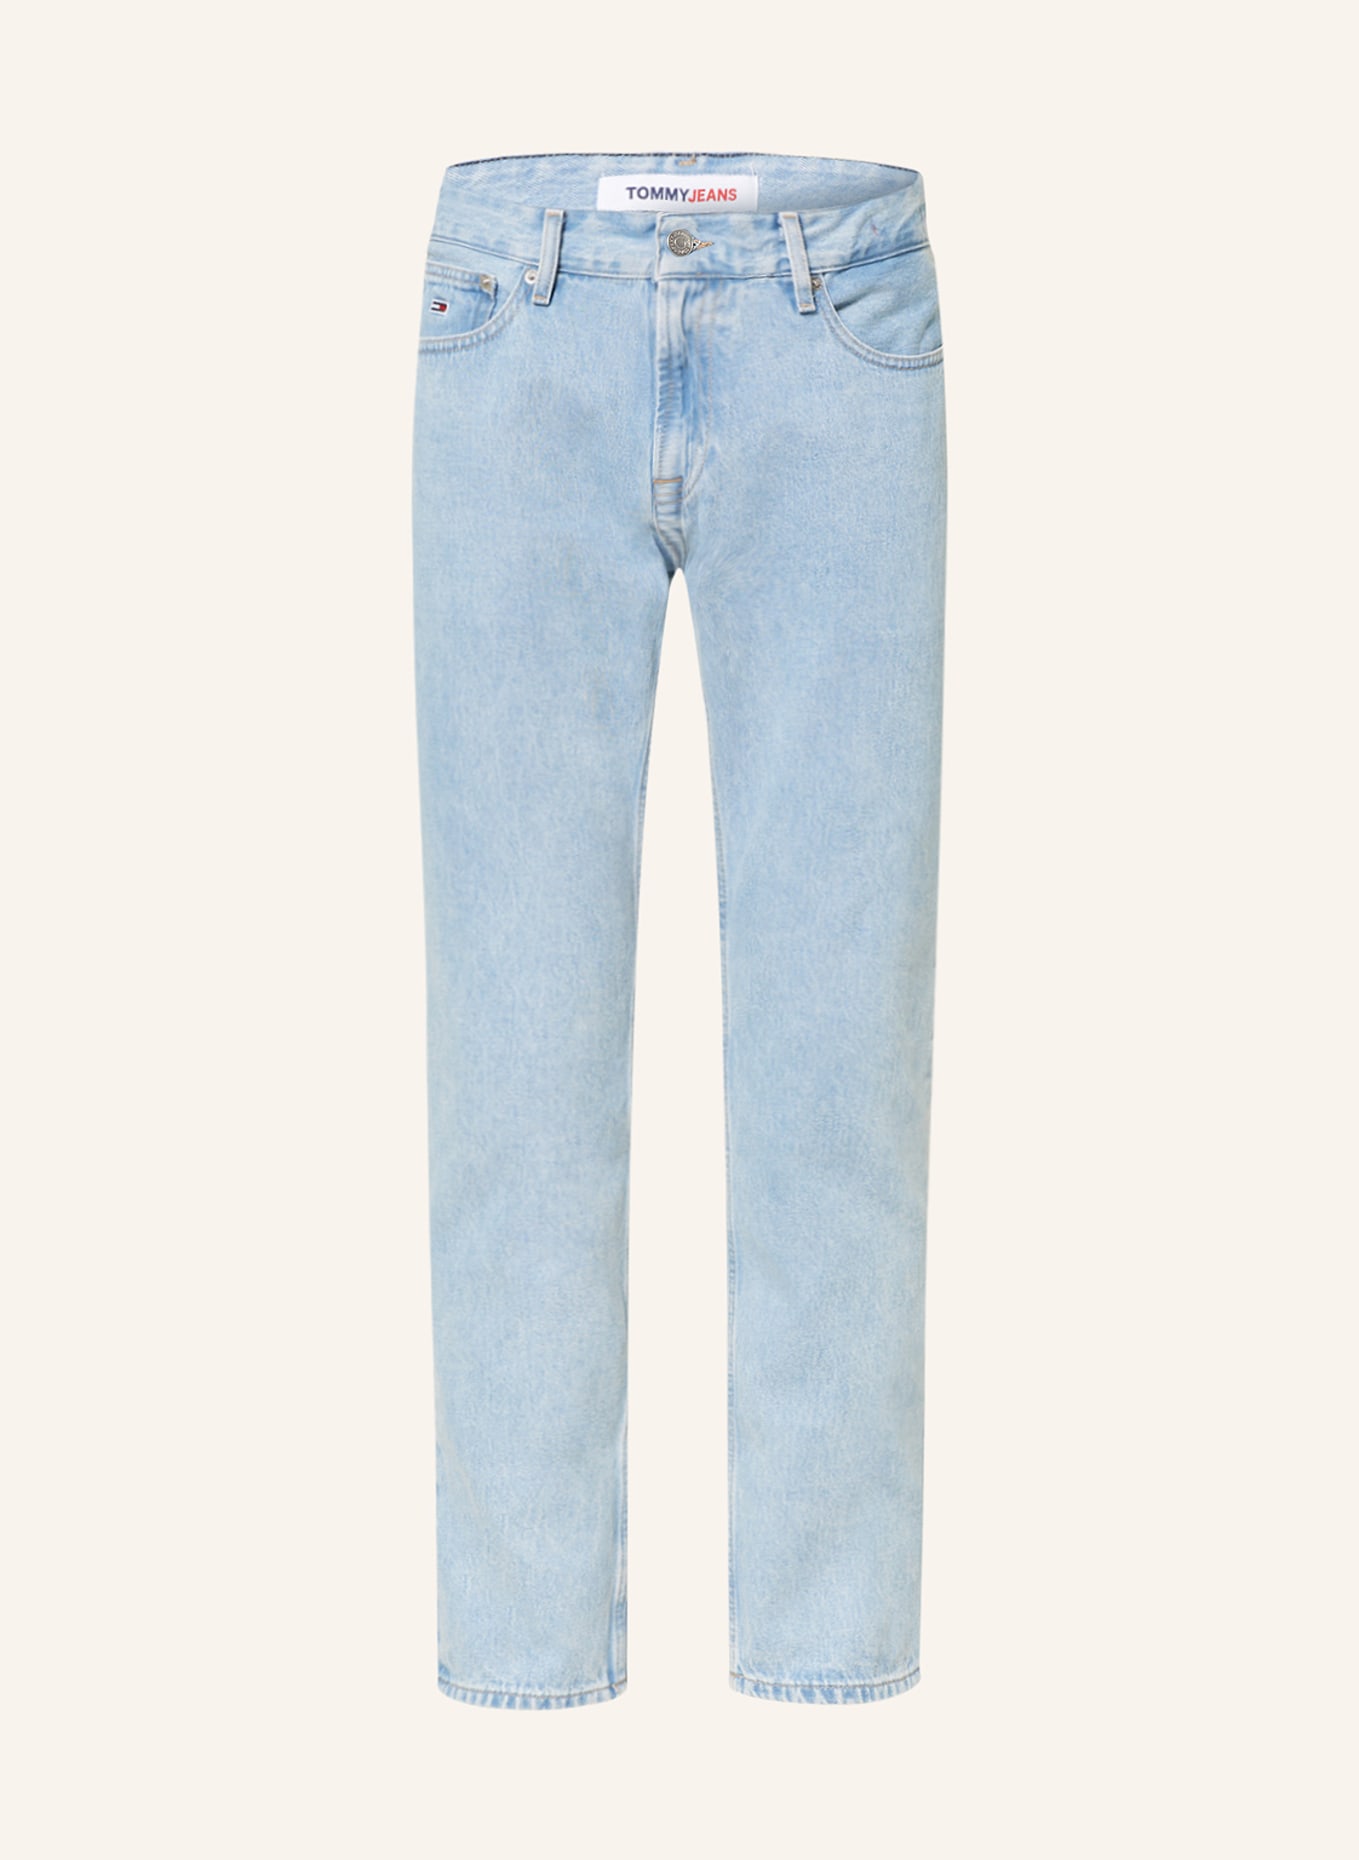 TOMMY JEANS Jeans Slim Fit, Farbe: 1AB Denim Light (Bild 1)